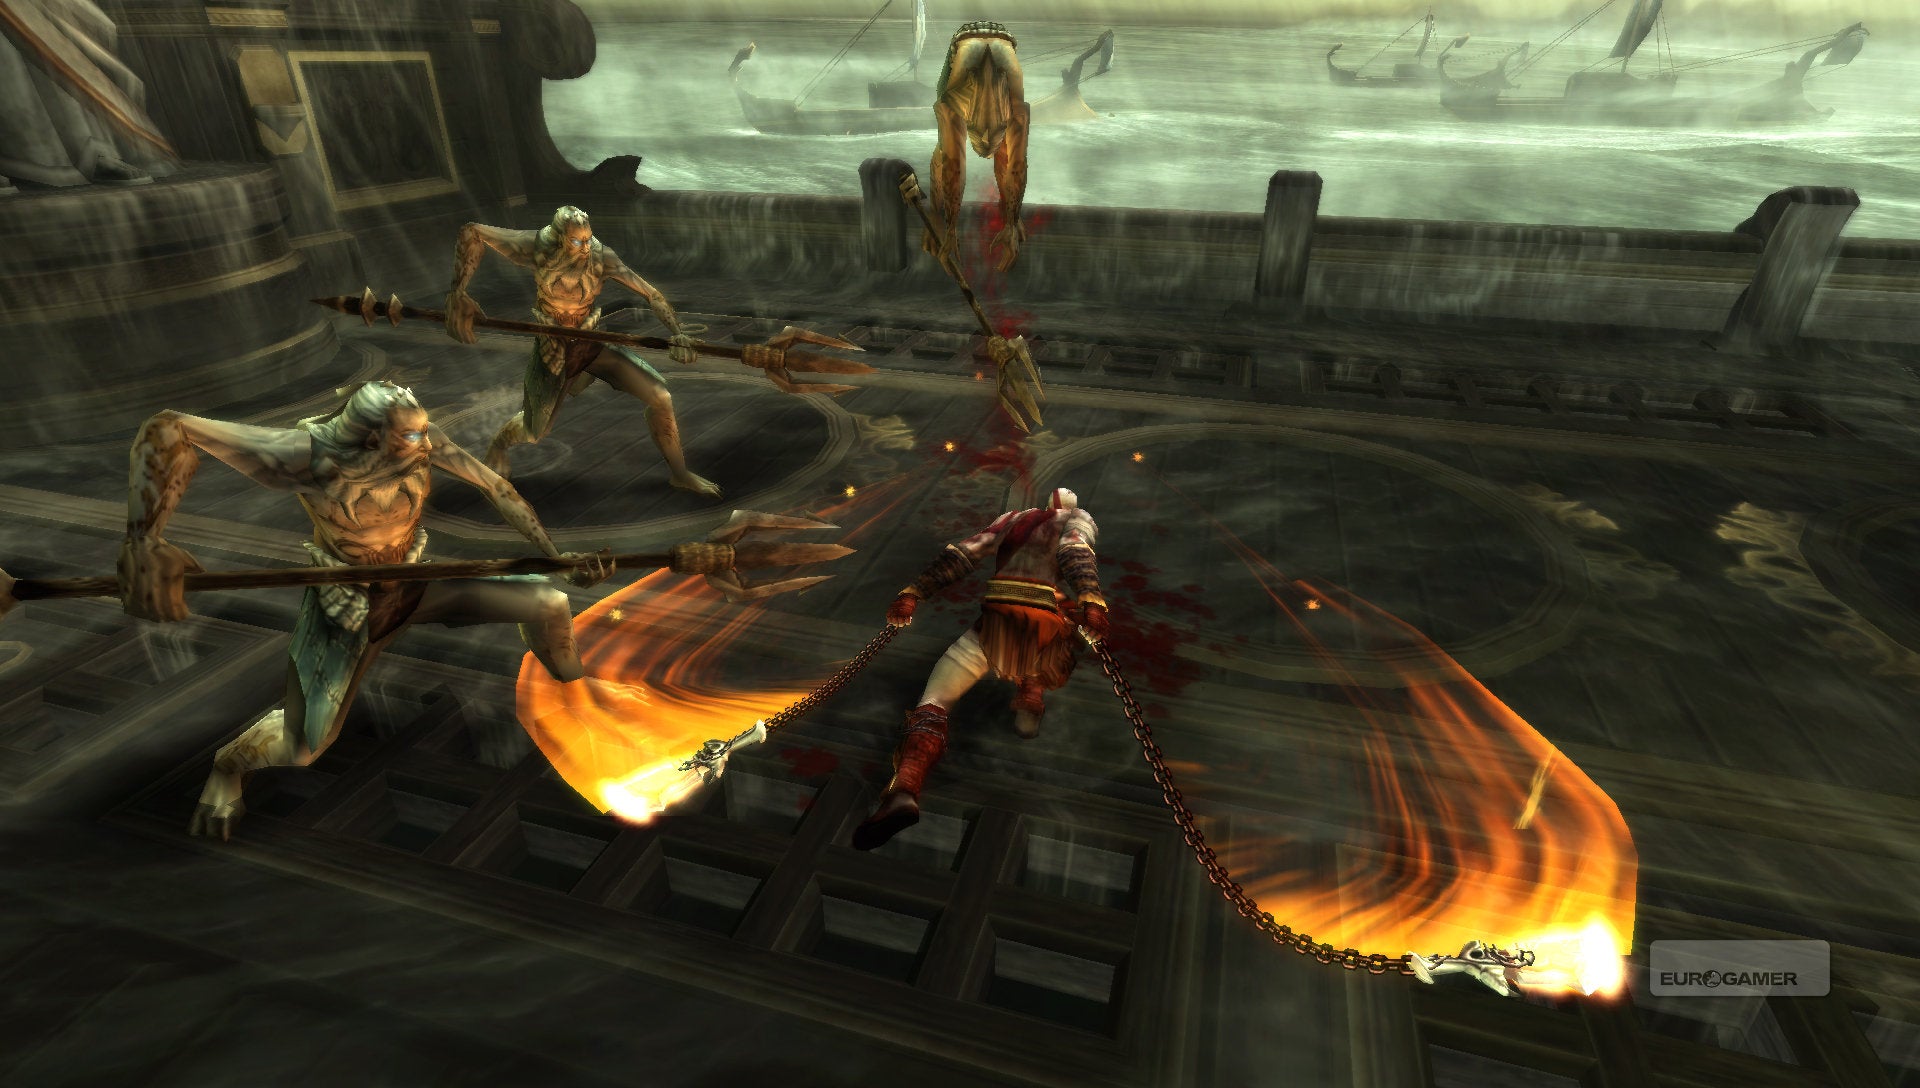 Sada constantemente agudo God of War: Ghost of Sparta | Eurogamer.es